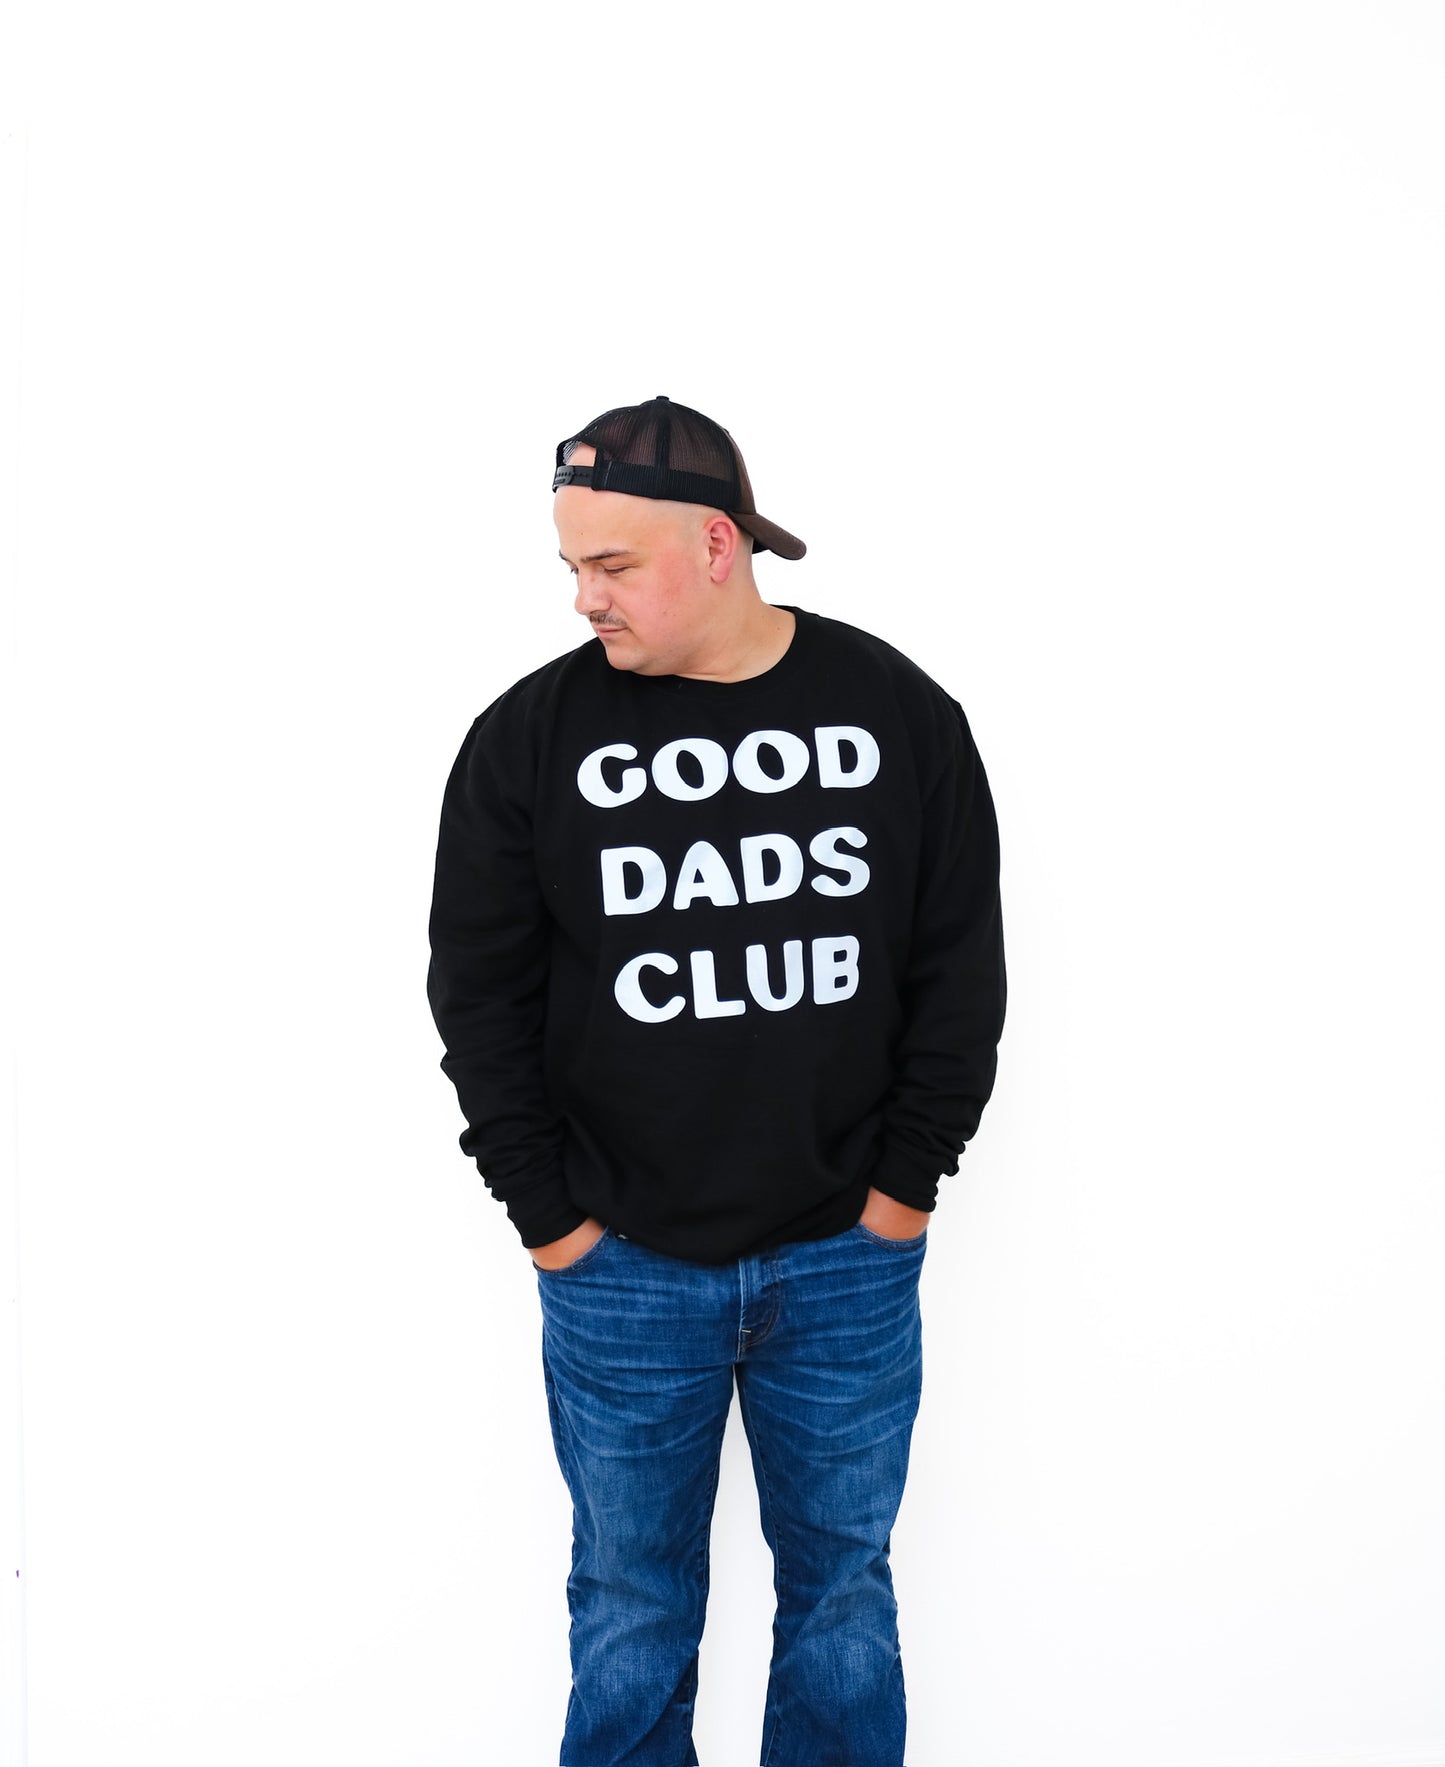 Good Dads Club In Black - TEE or SWEATSHIRT!